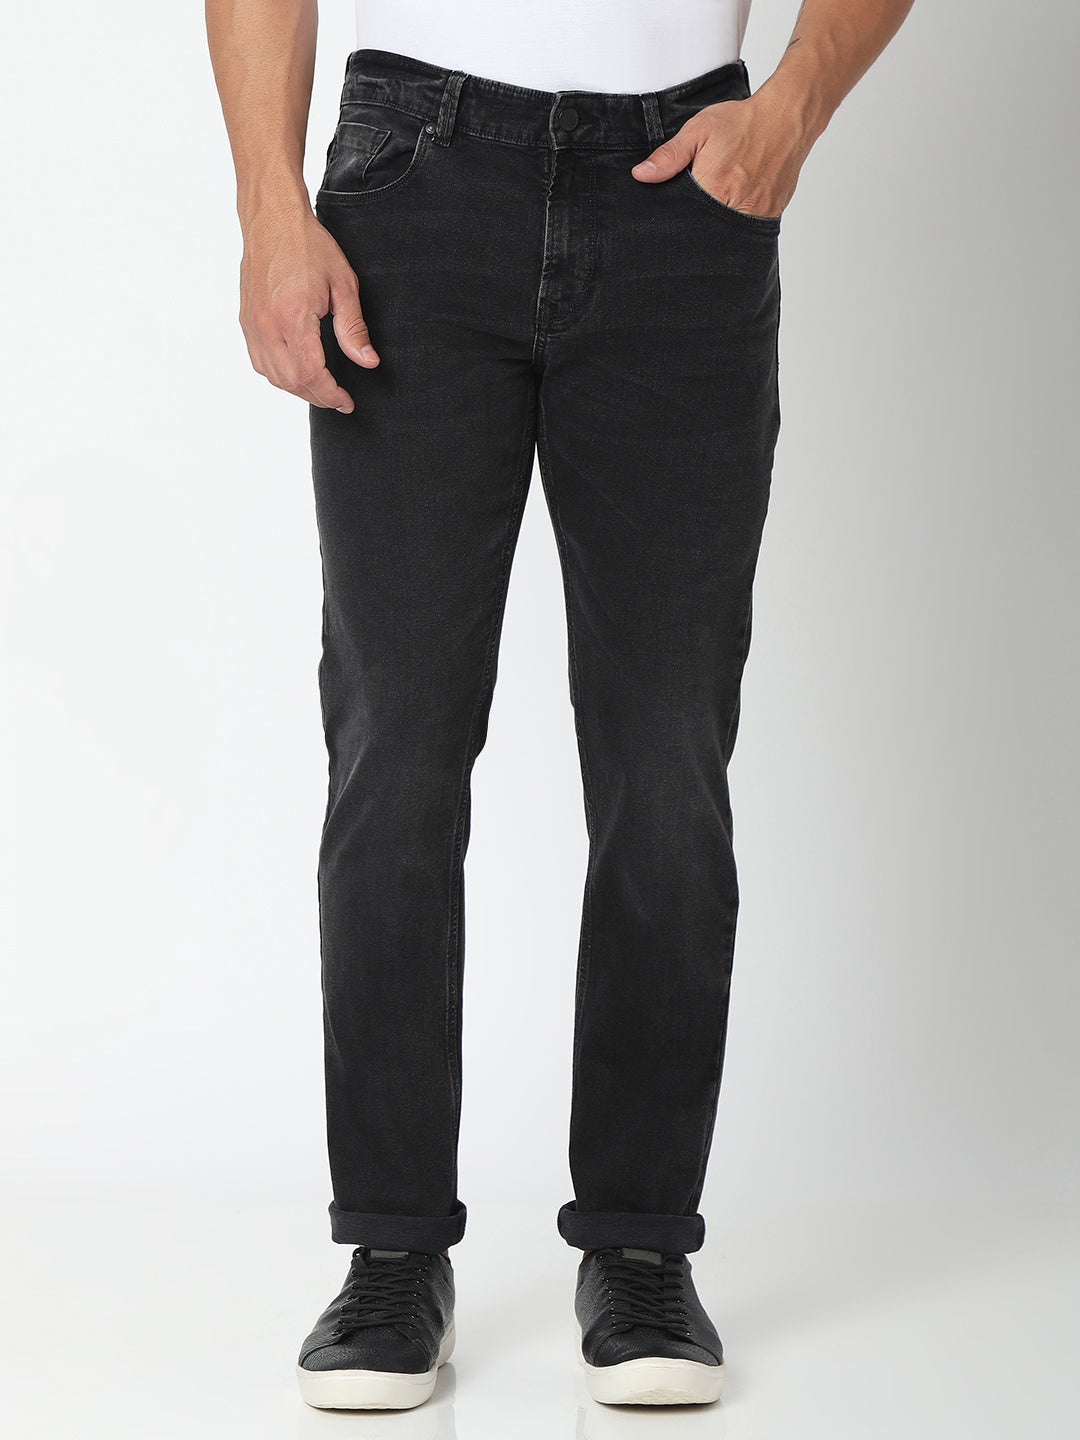 Spykar Charcoal Black Cotton Comfort Fit Straight Length Jeans For Men (Ricardo)